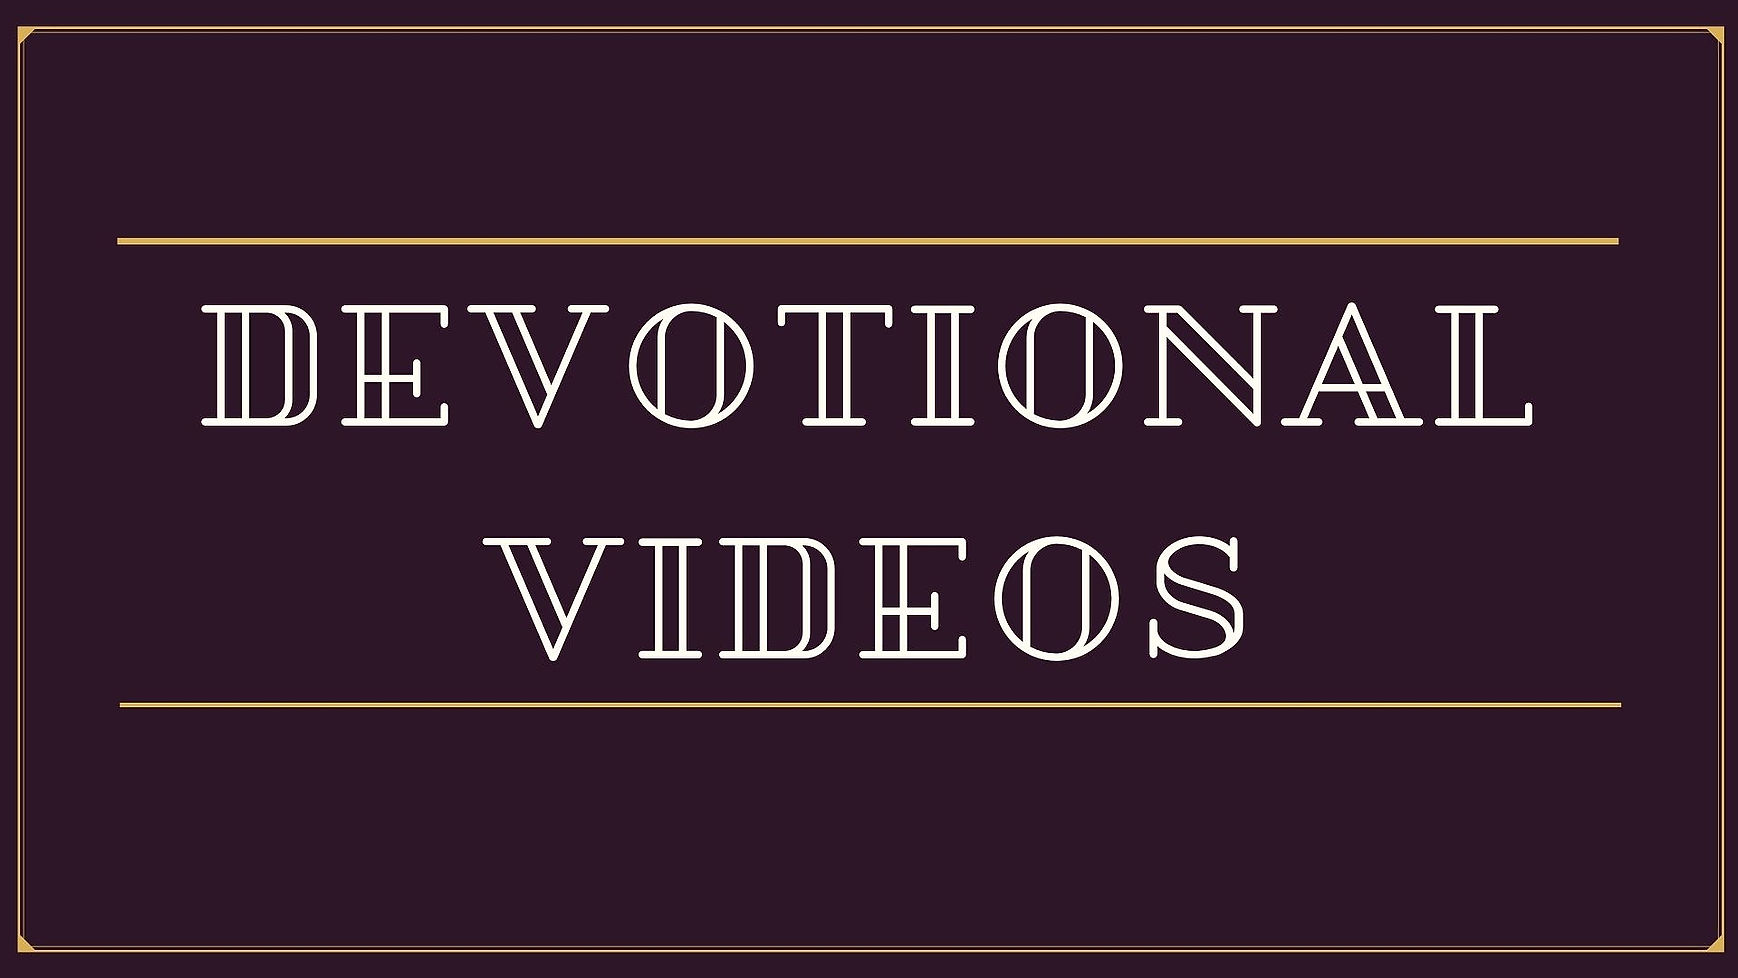 Devotional Videos